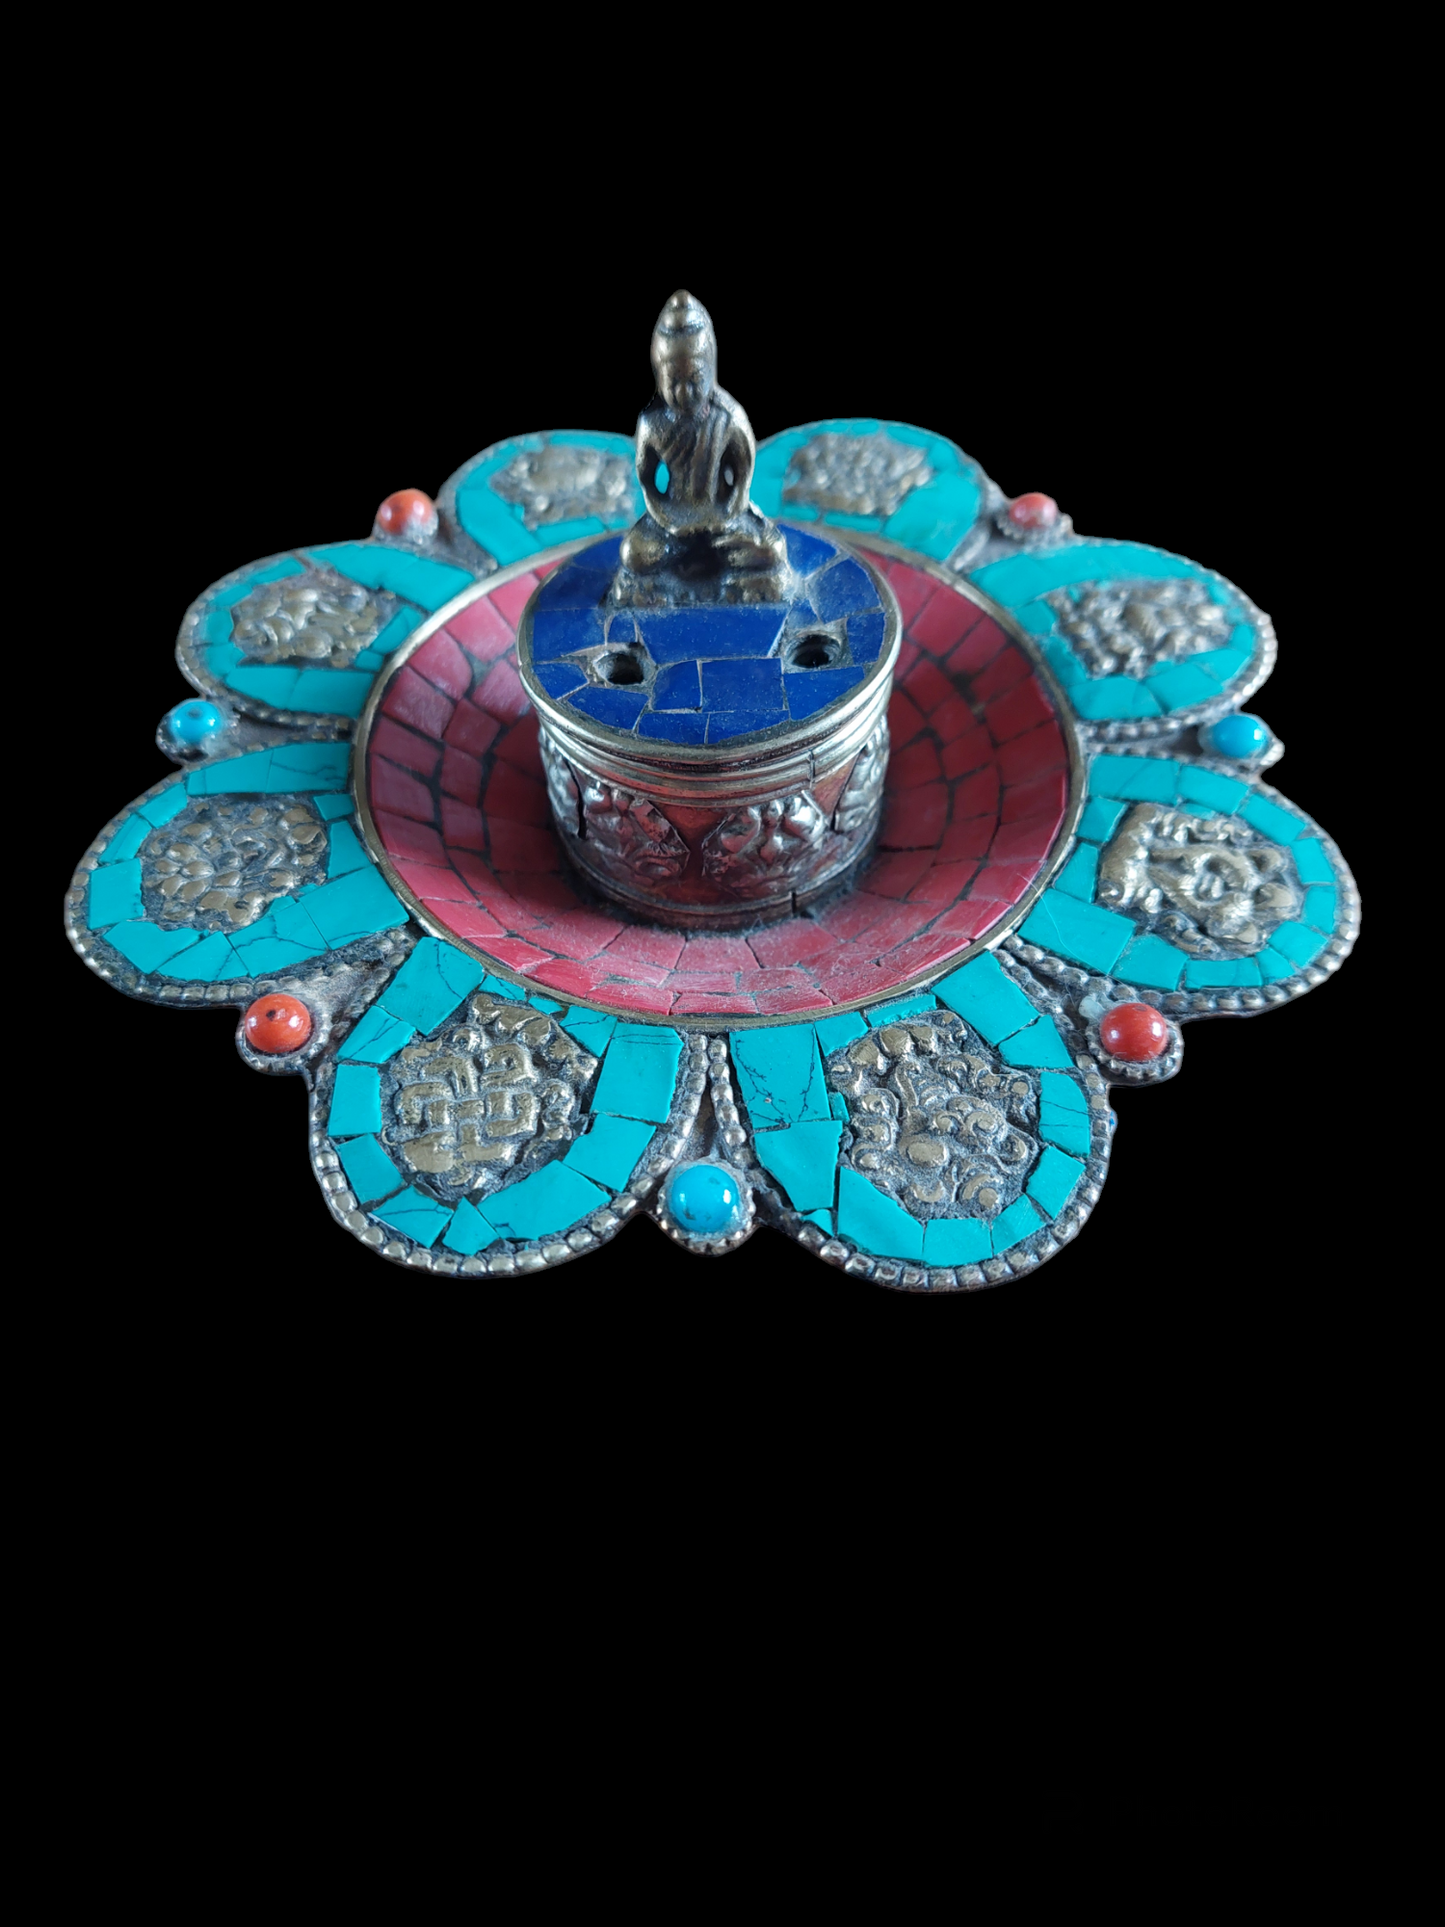 Vintage Tibetan incense burner with Buddha